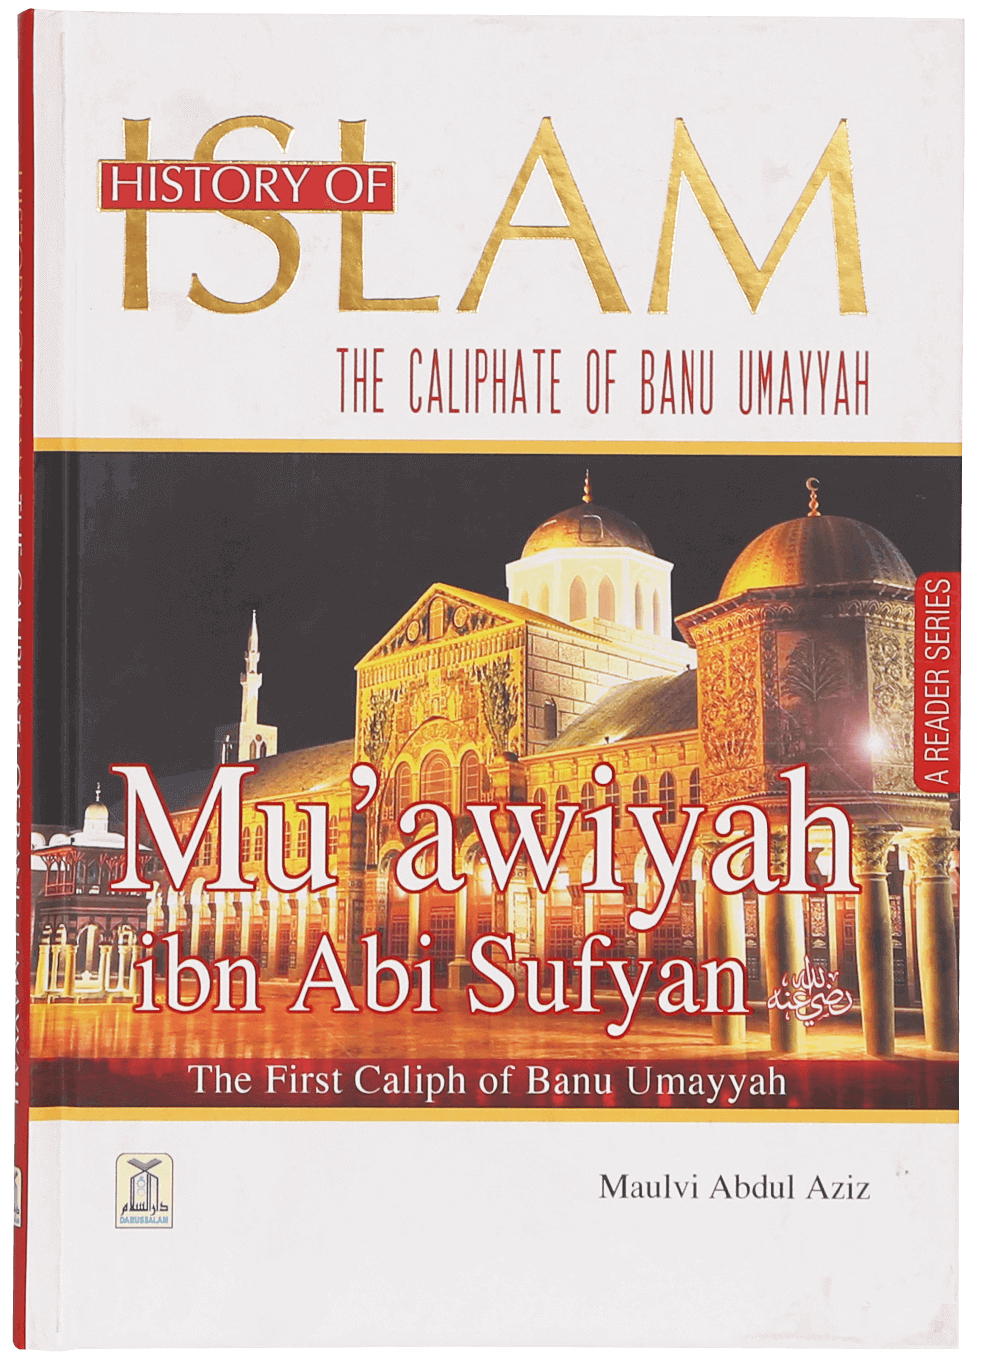 History Of Islam Muawiyah Ibn Abi Sufyan (RA)